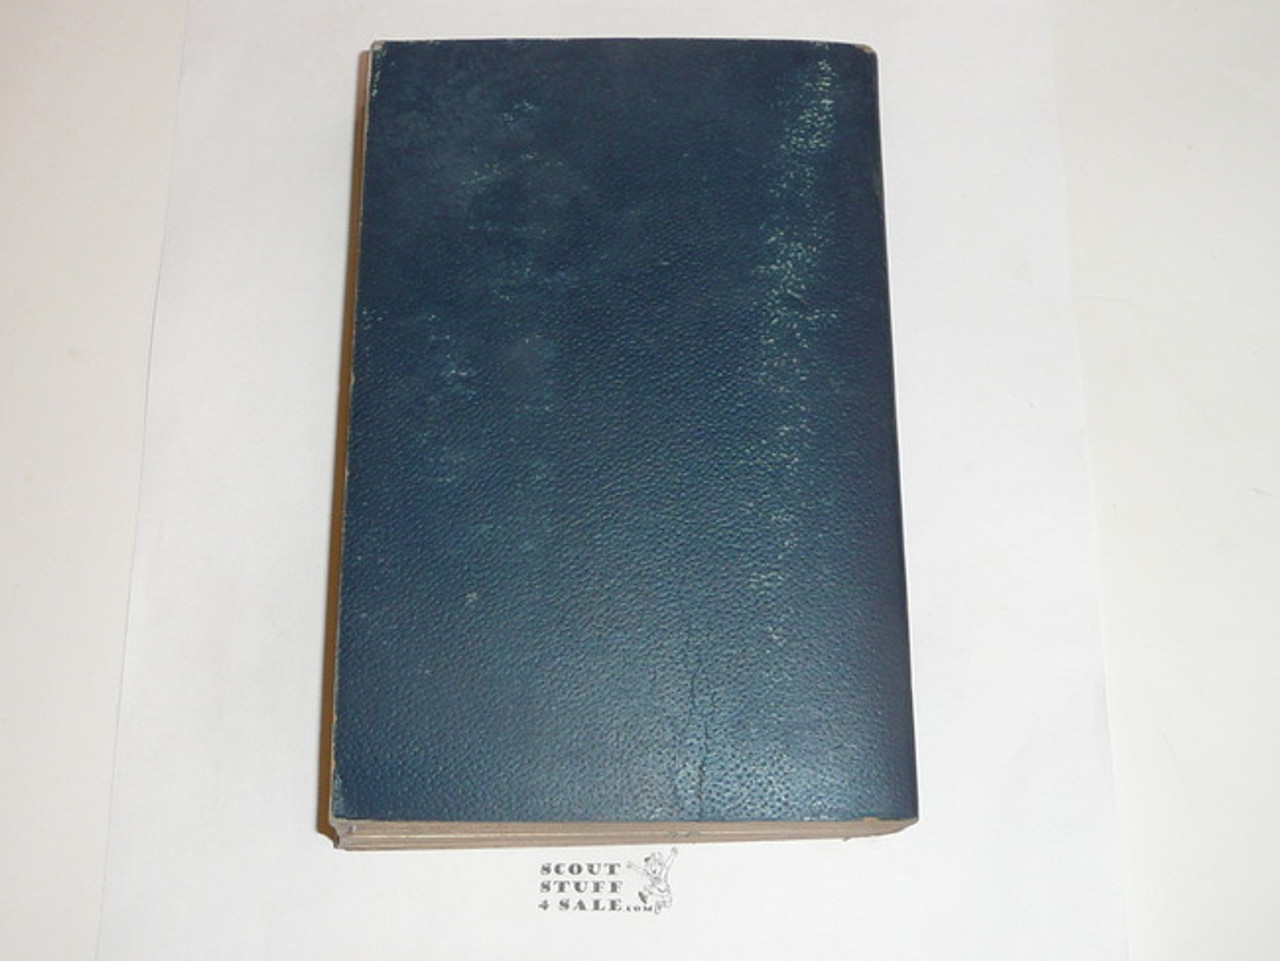 1947 The Sea Scout Manual, Sixth Edition, Ninth Printing